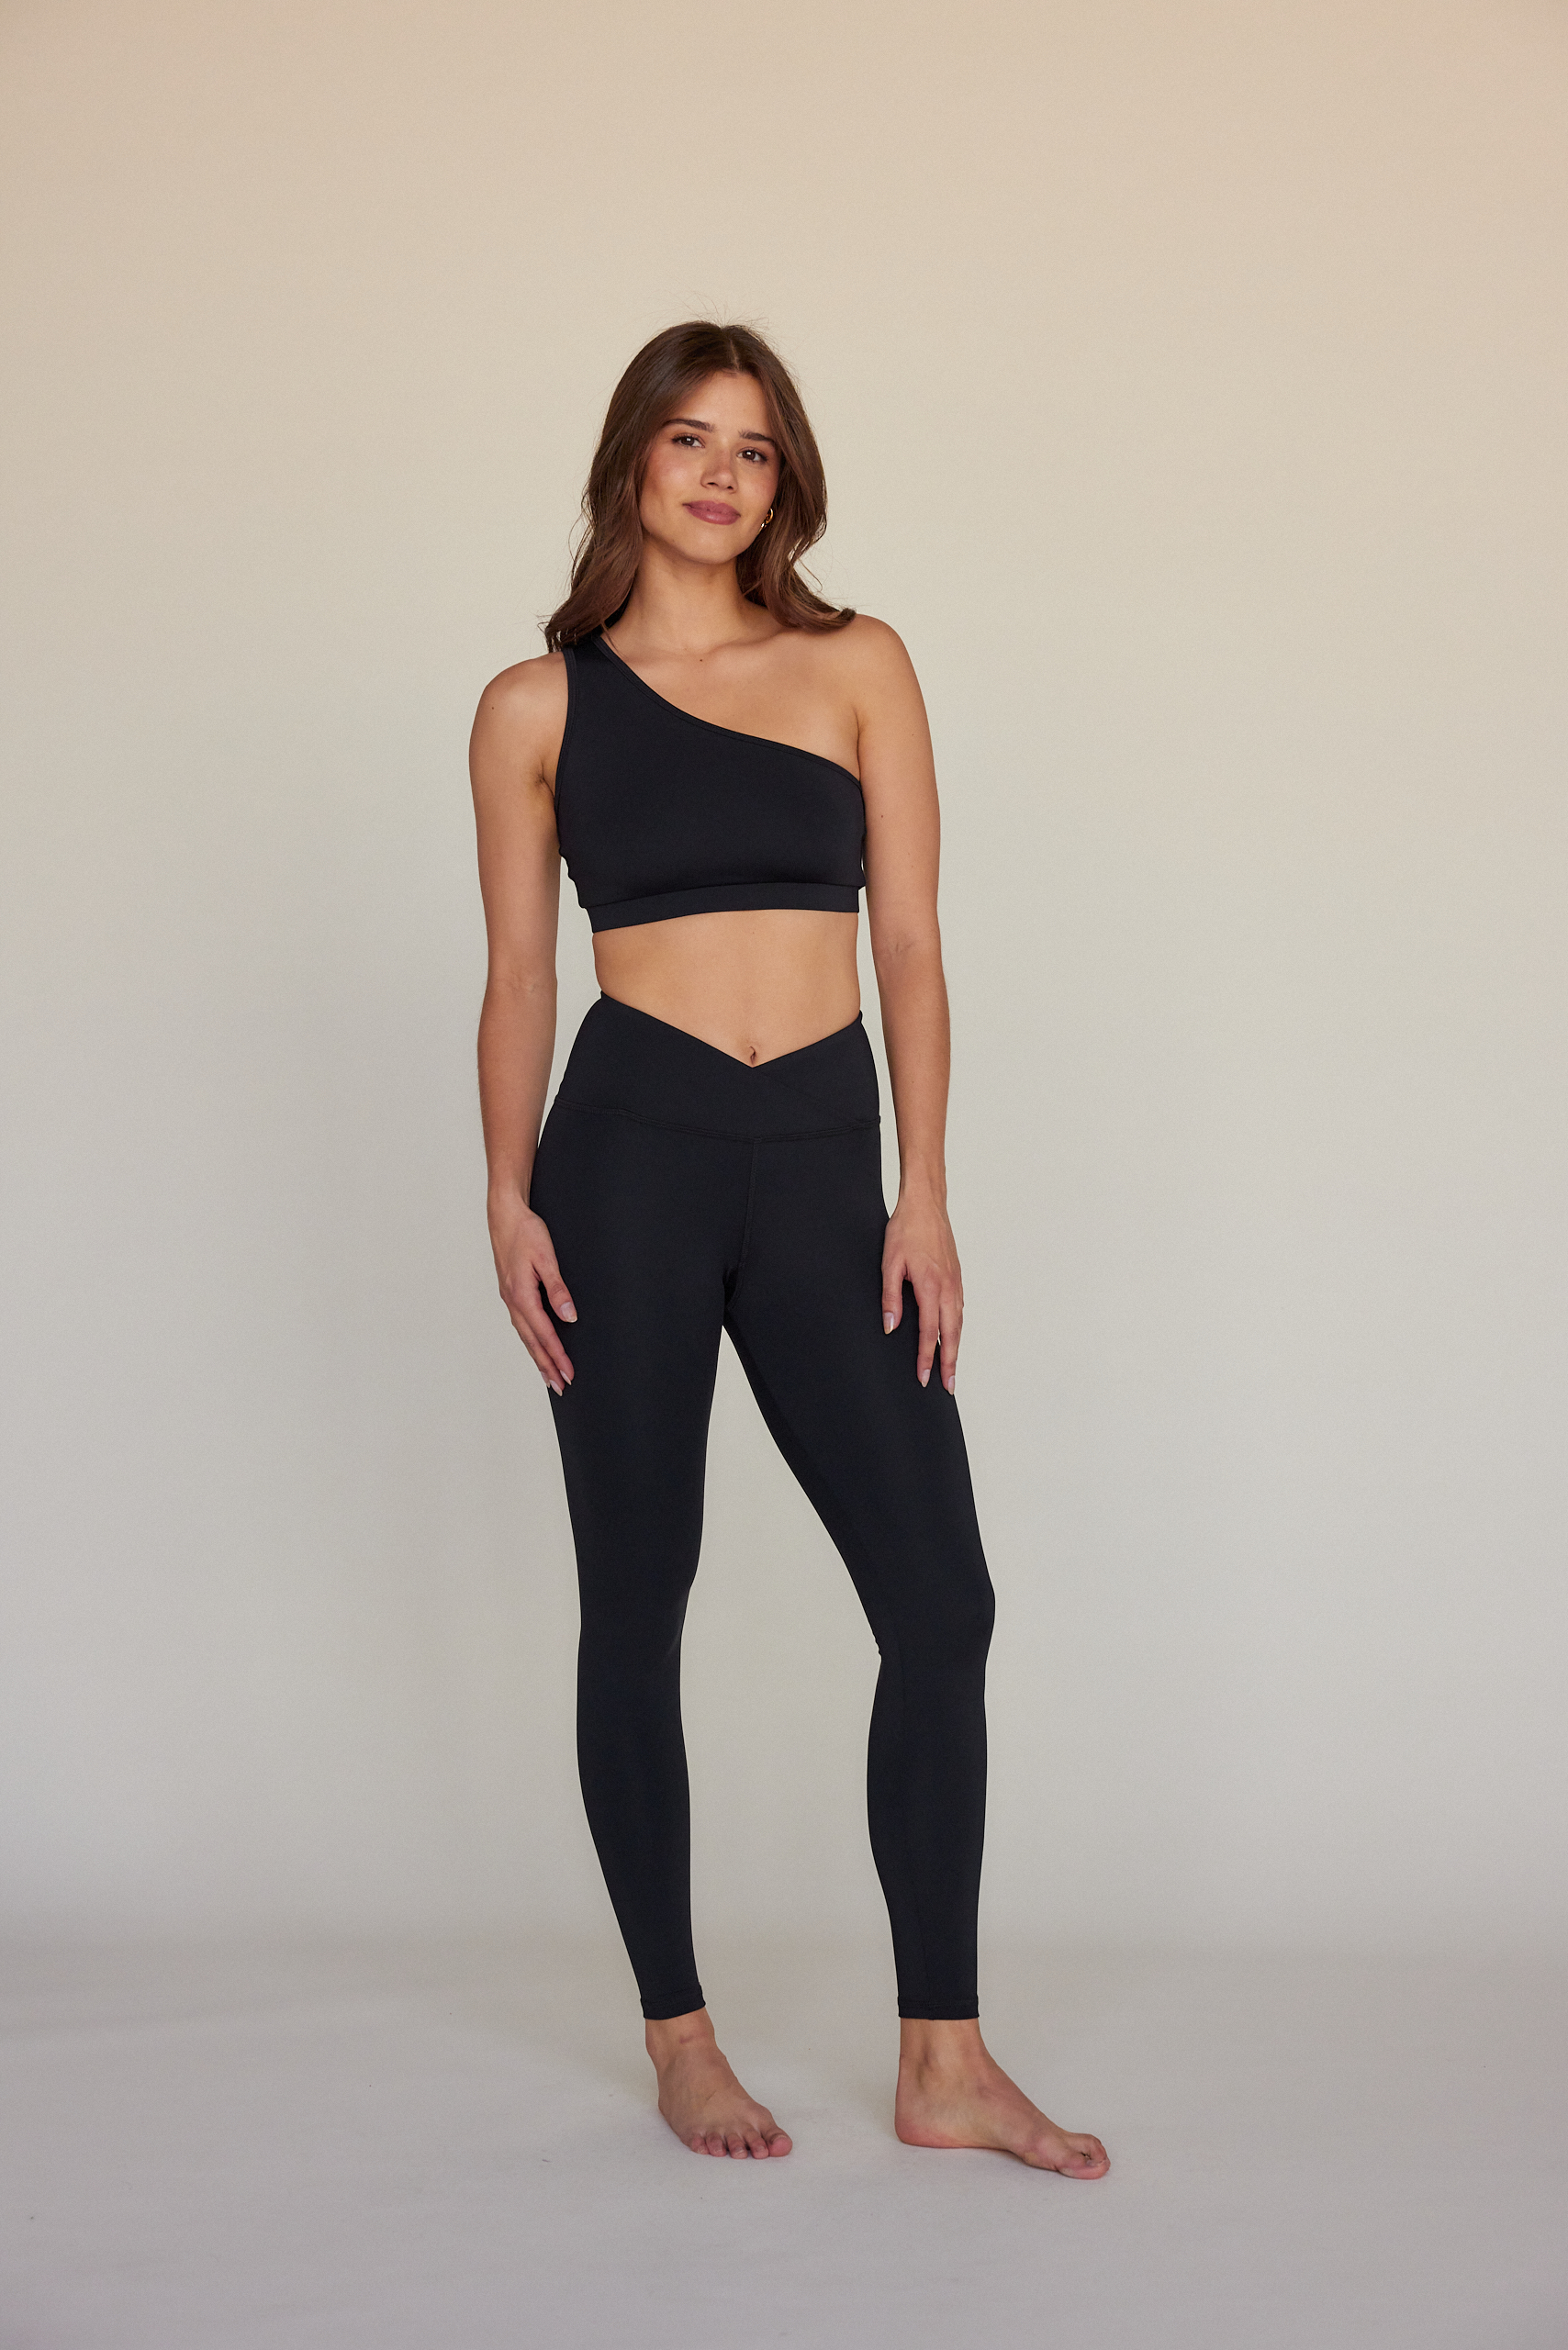 Fashion star trek Print Sport Yoga Fitness Leggings Gym Pants for Women  Lady Exercise Running Crop Trousers